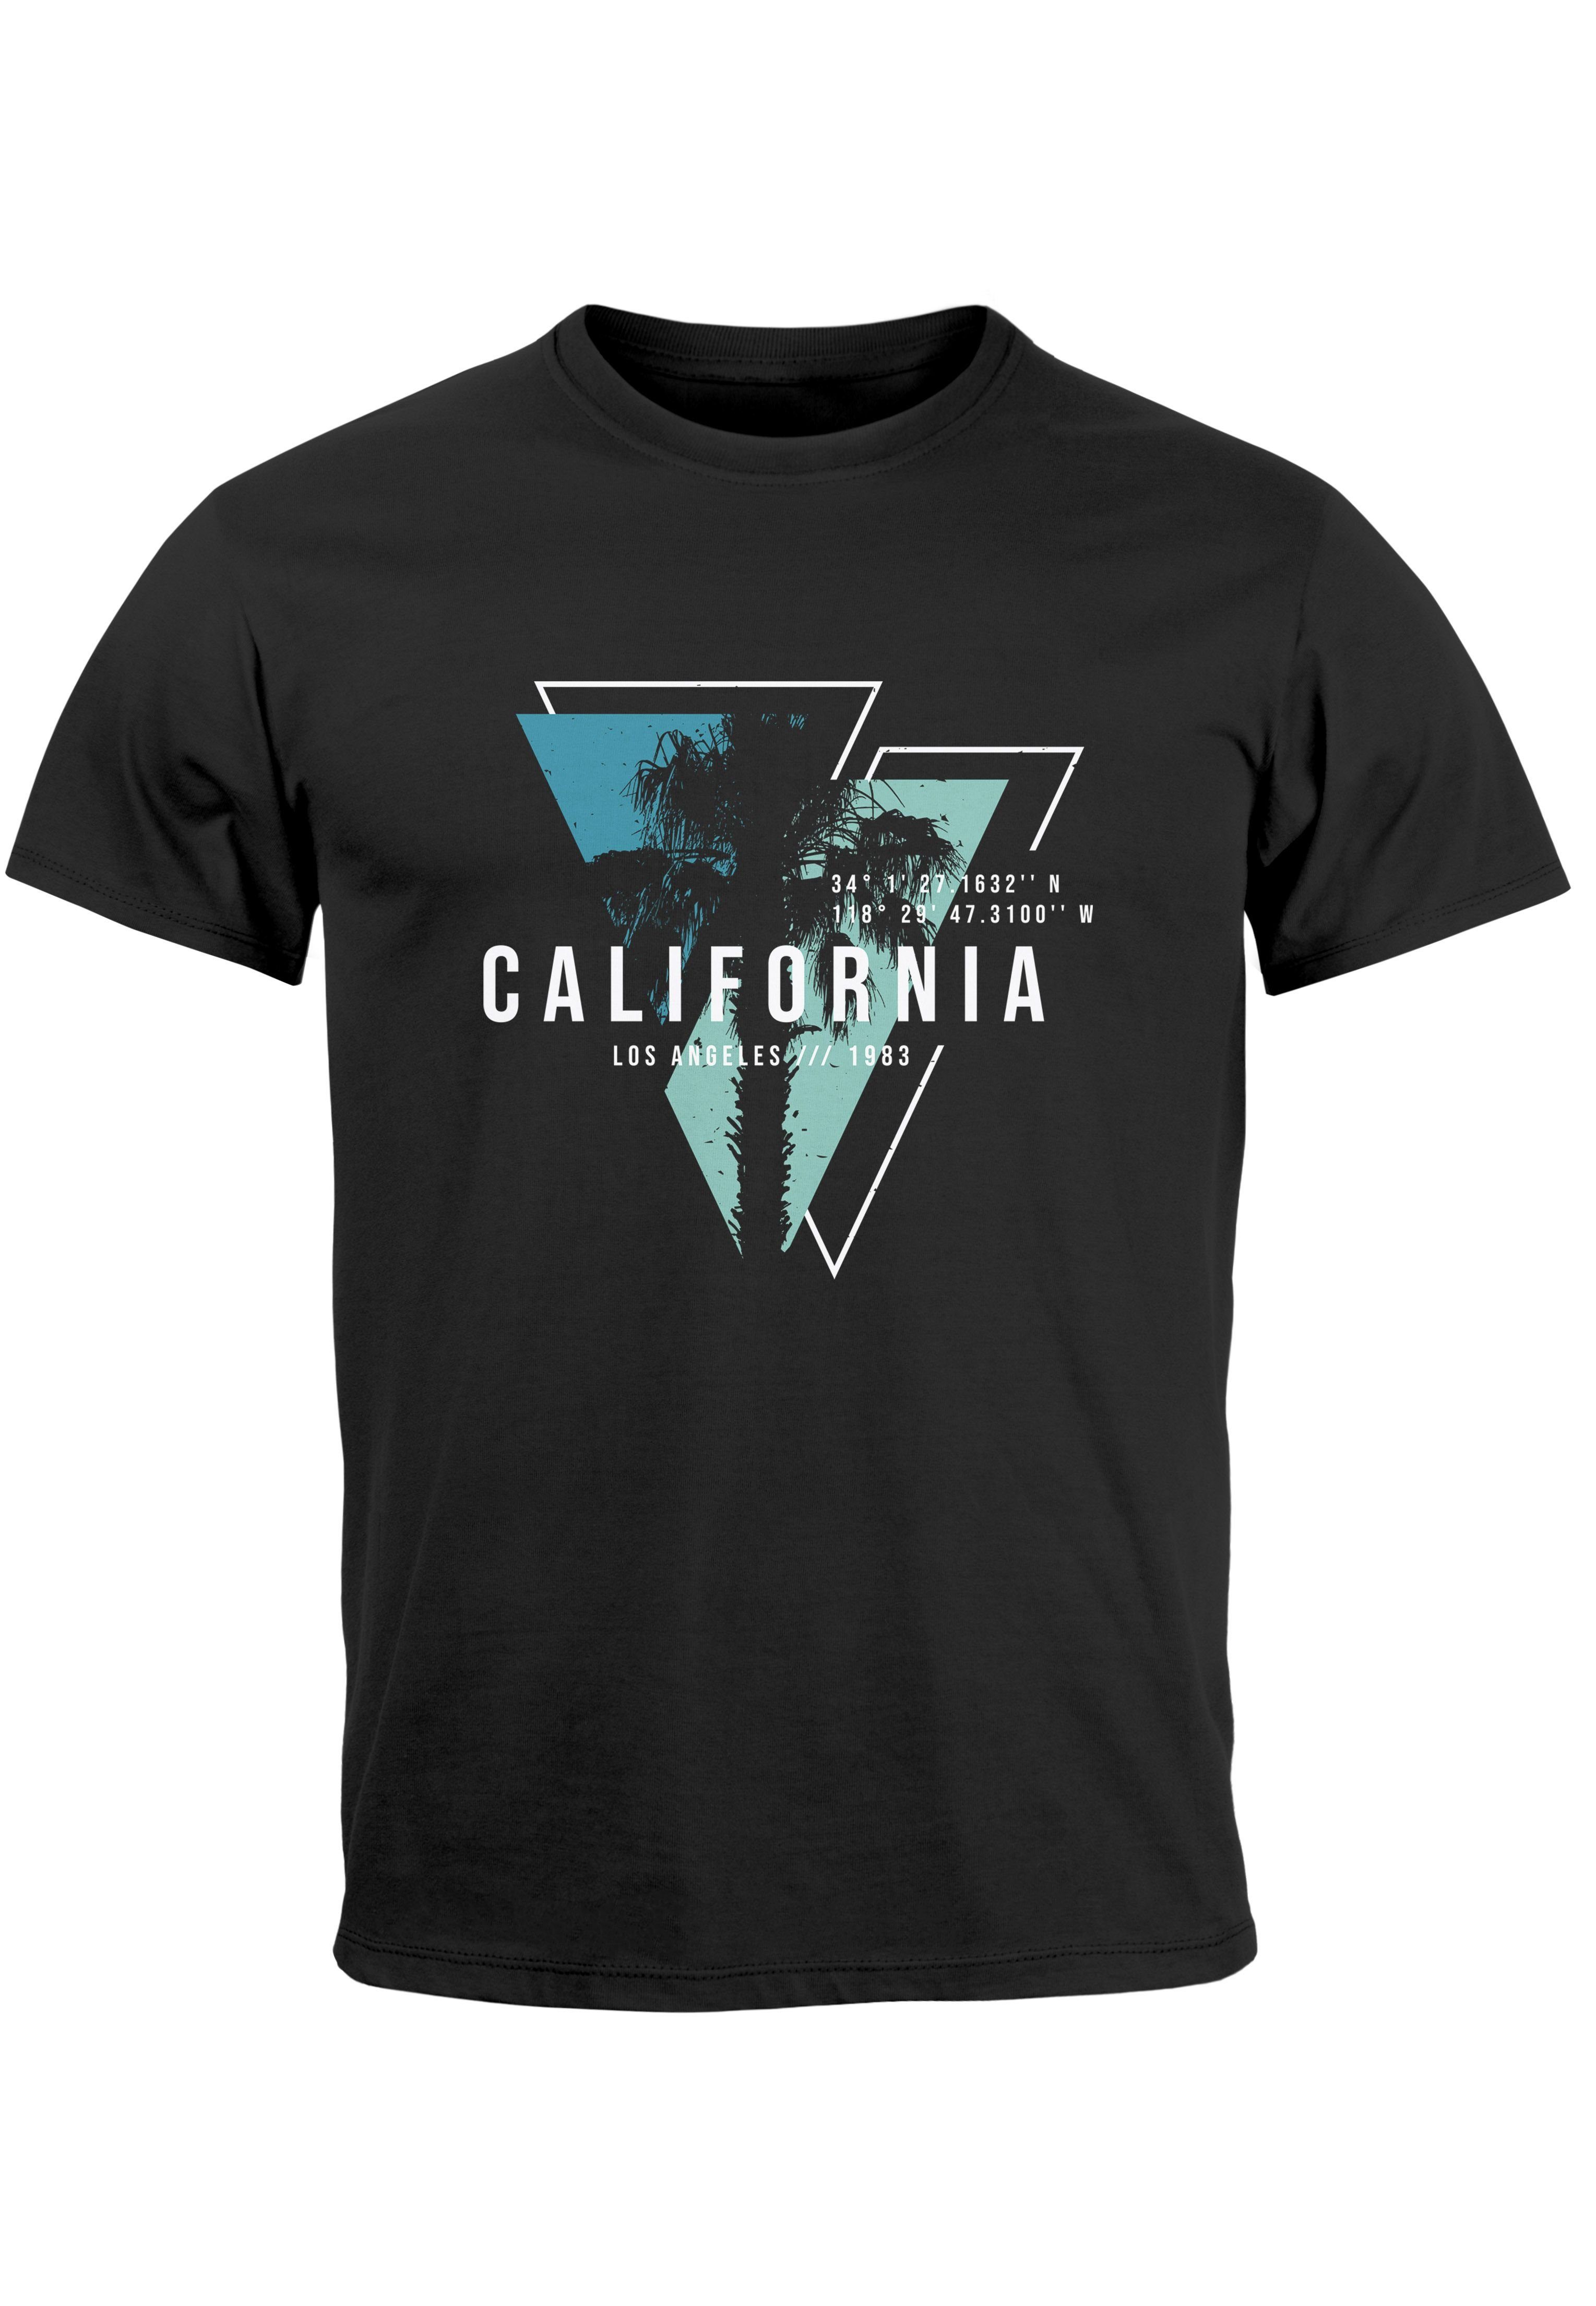 Neverless Print-Shirt Herren T-Shirt California Los Angeles Surfing Motiv Sommer Fashion USA mit Print schwarz/blau